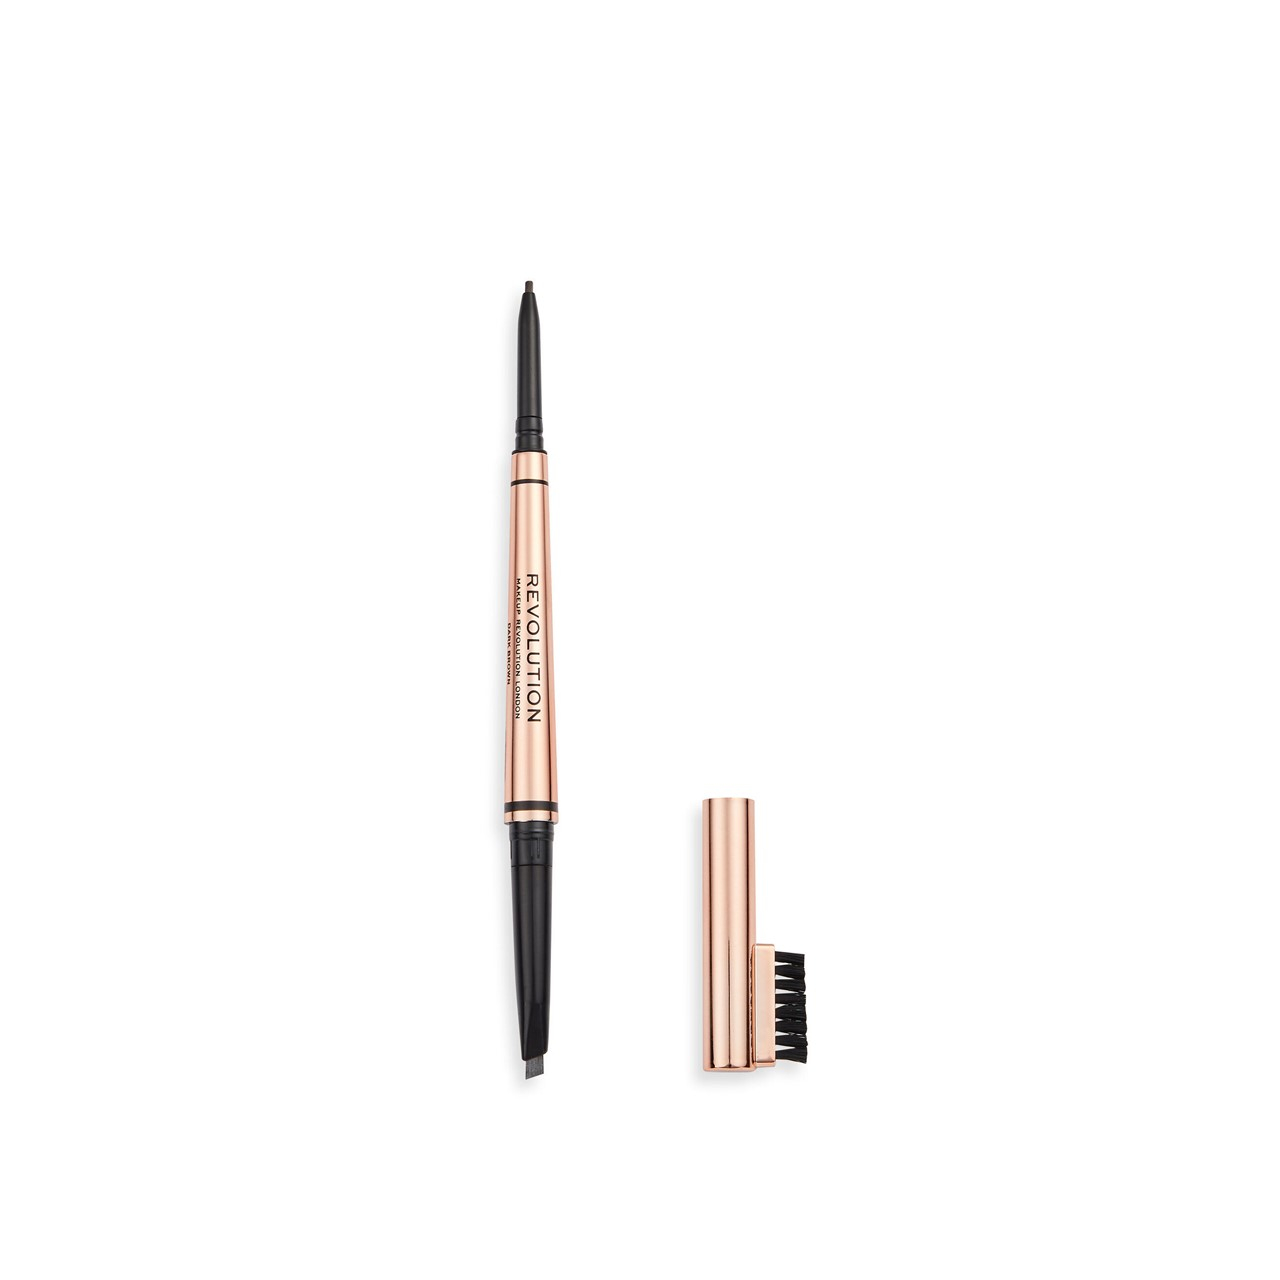 Makeup Revolution Balayage Duo Brow Pencil Dark Brown 0.38g (0.01oz)